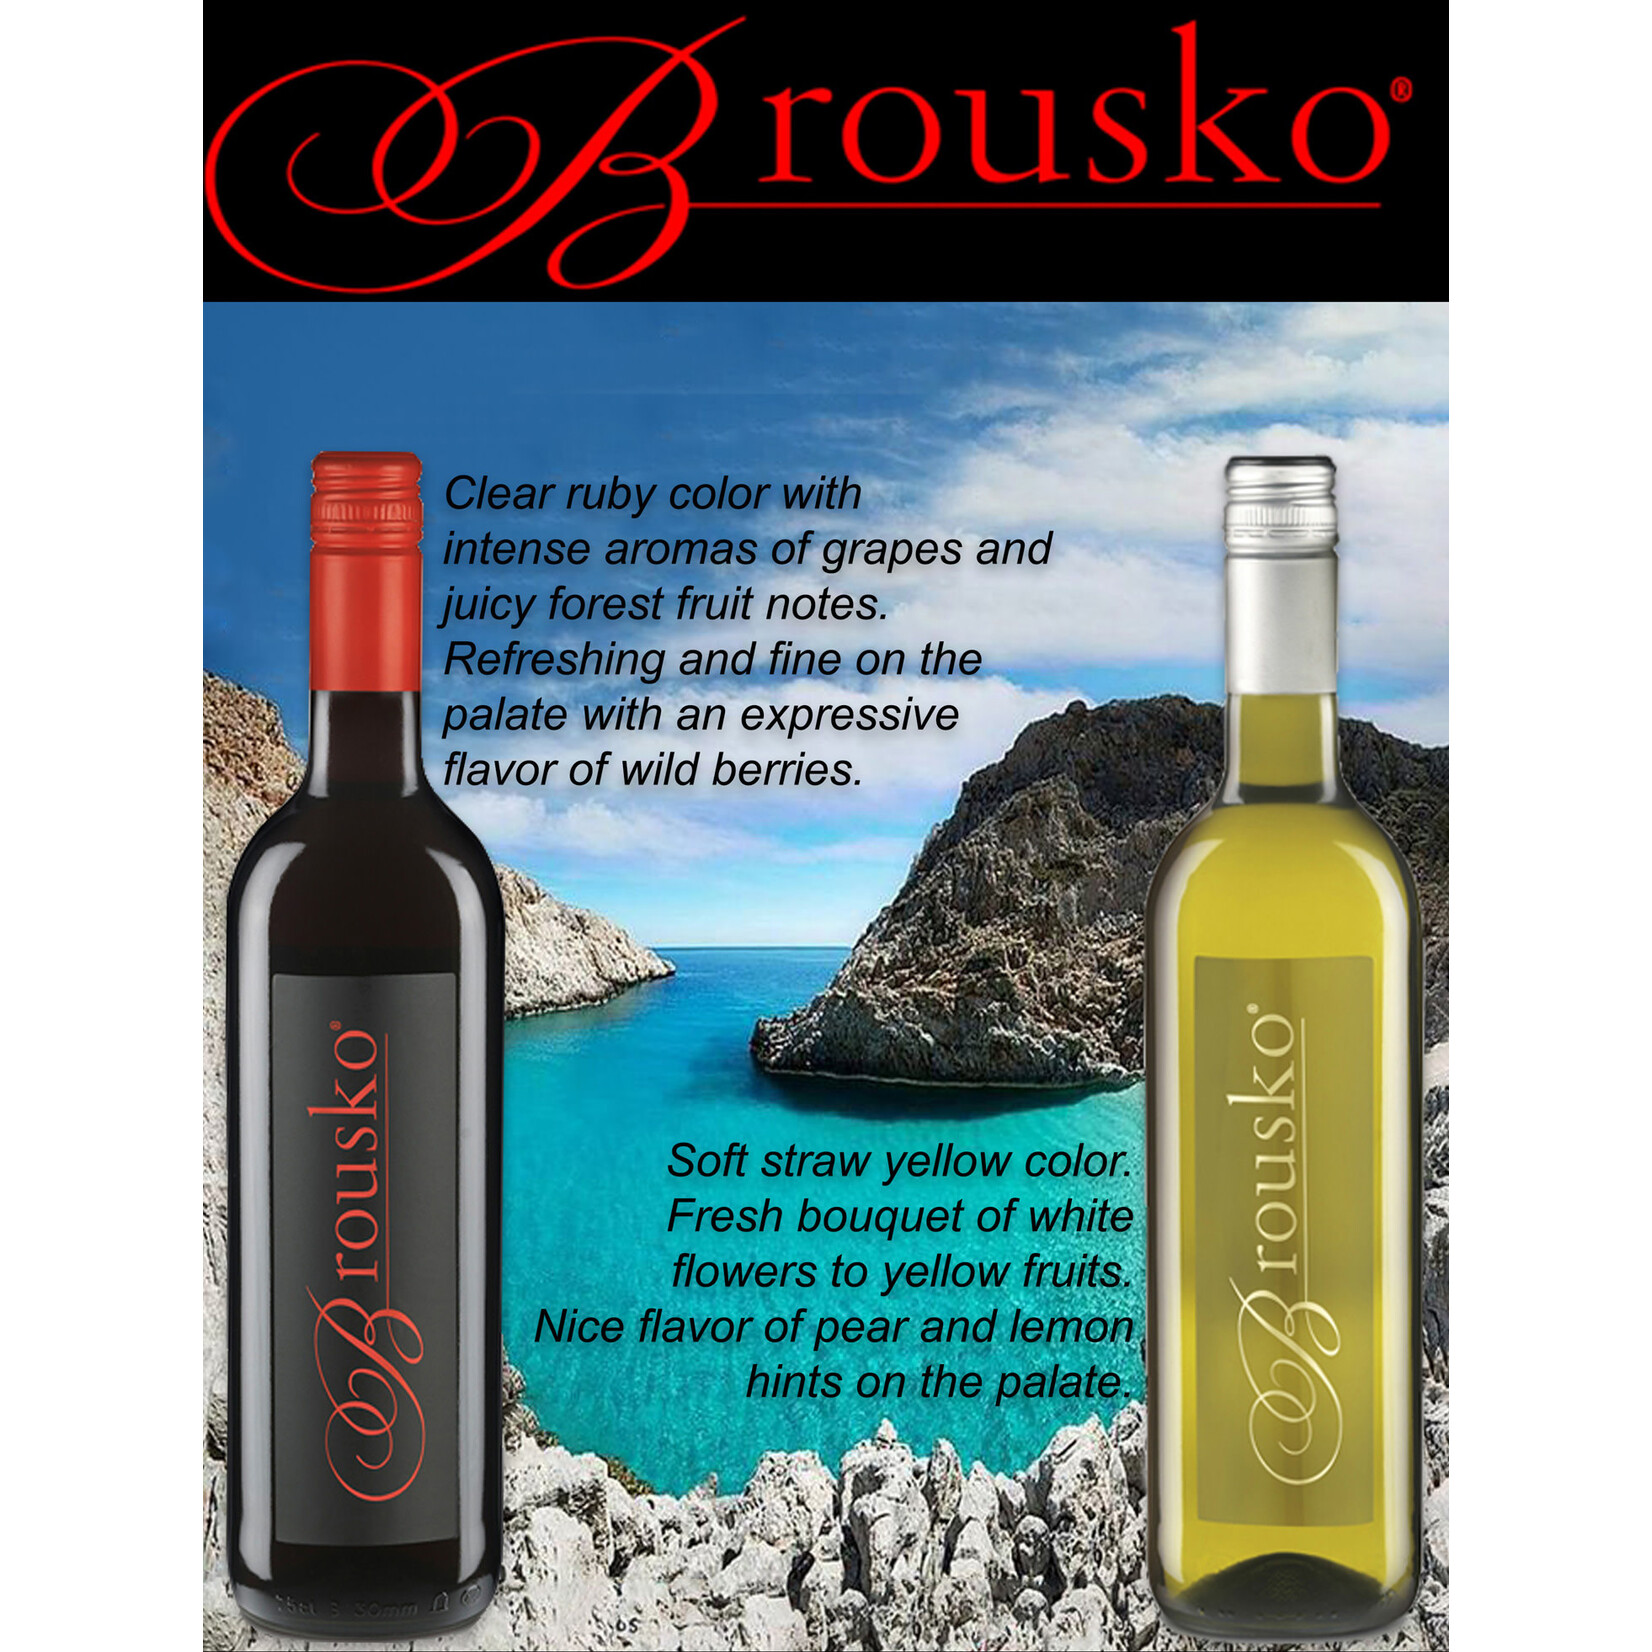 Brousko Red Wine NV Greece